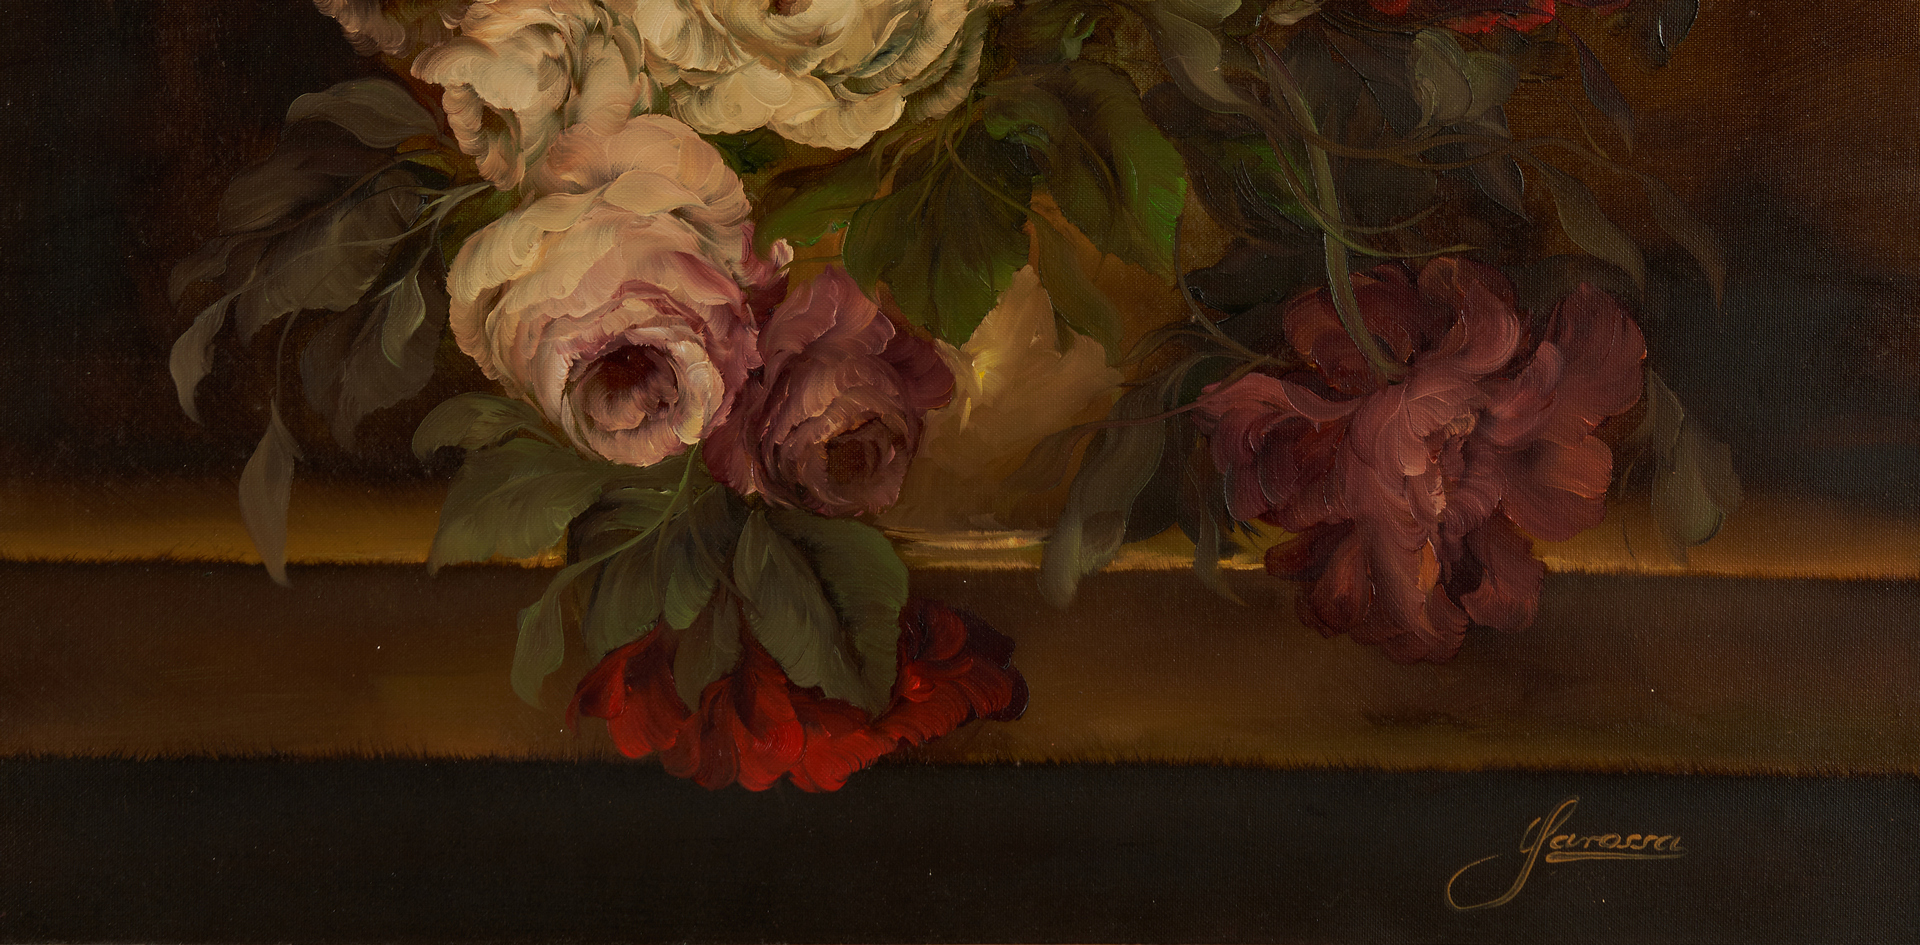 Lot 691: Large O/C Floral Still Life Painting, H. Garossa